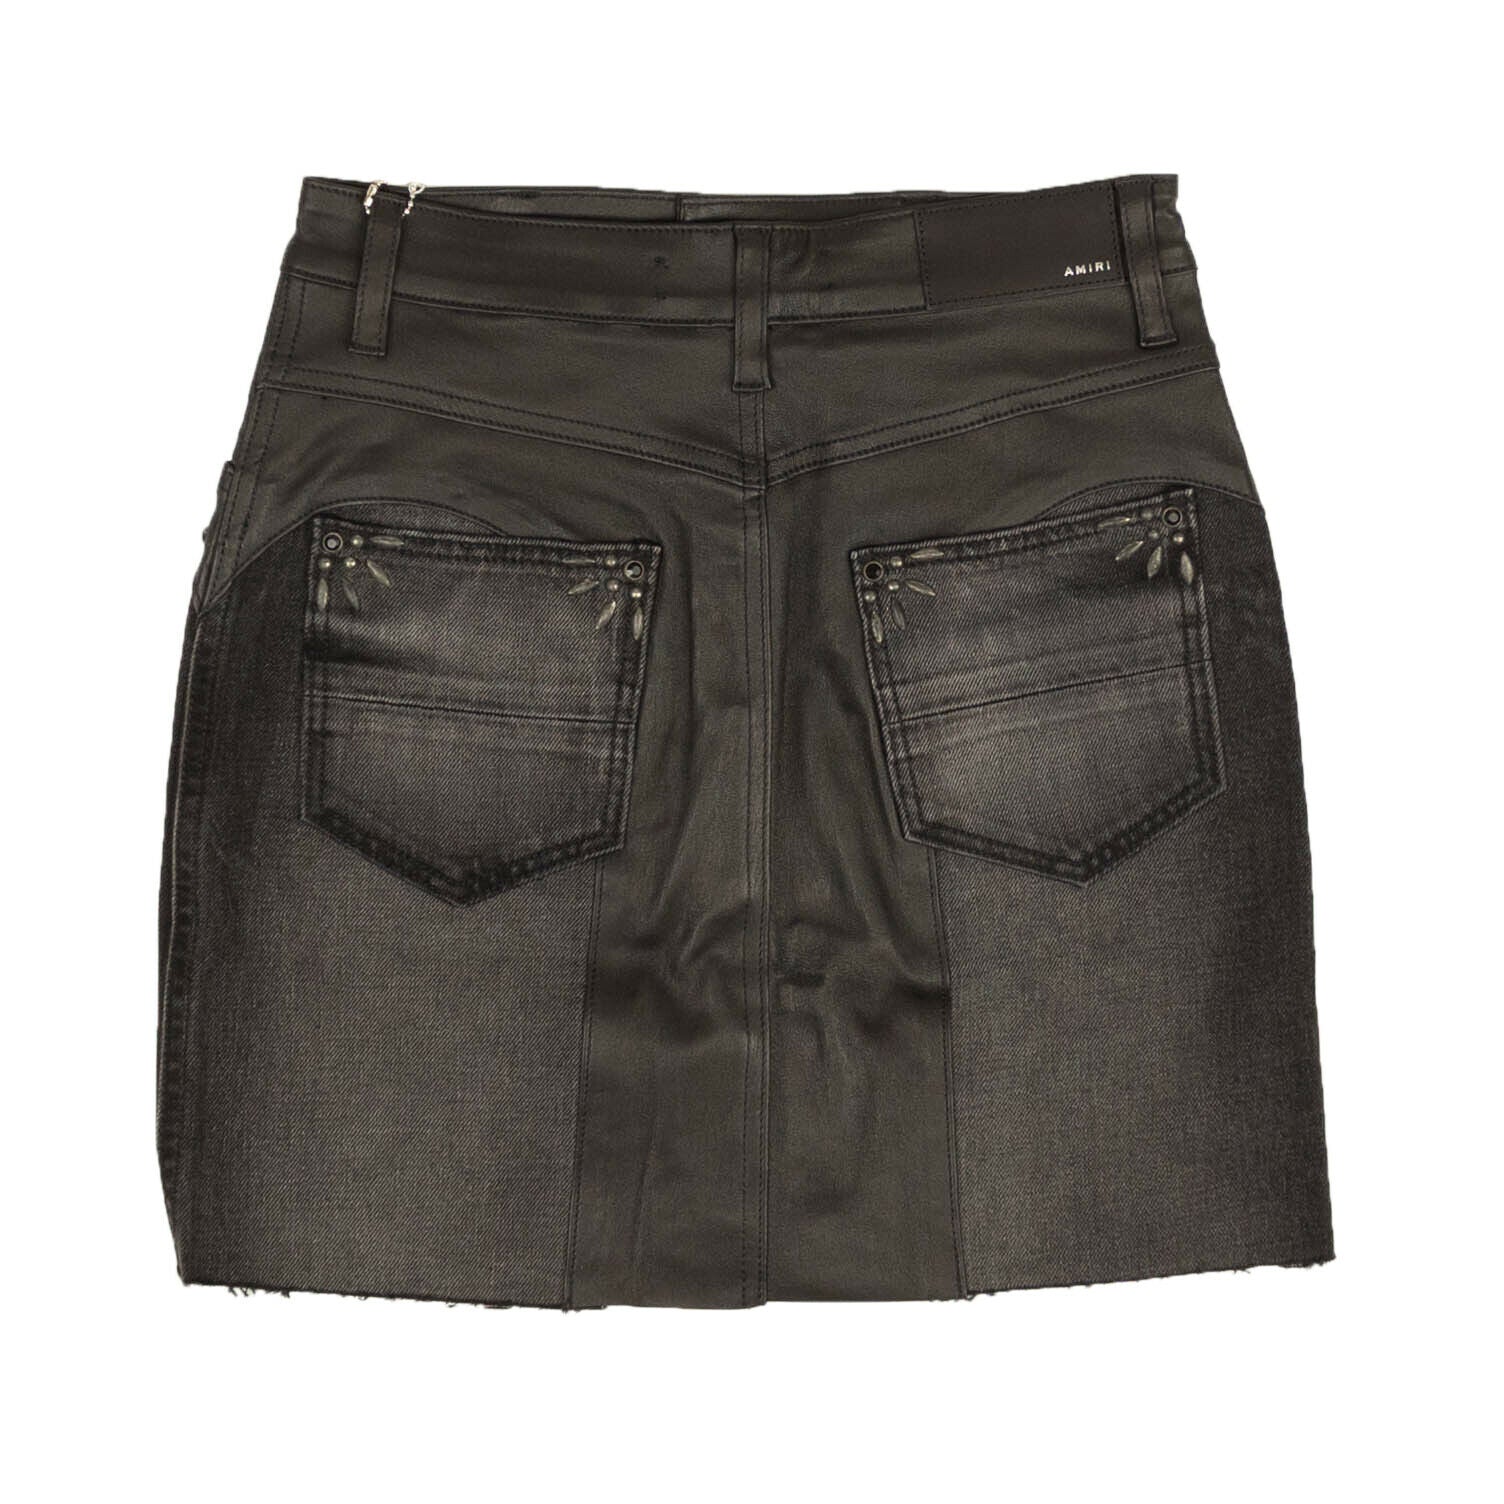 Amiri Western Denim & Leather Mix Mini Skirt - Denim/Leather